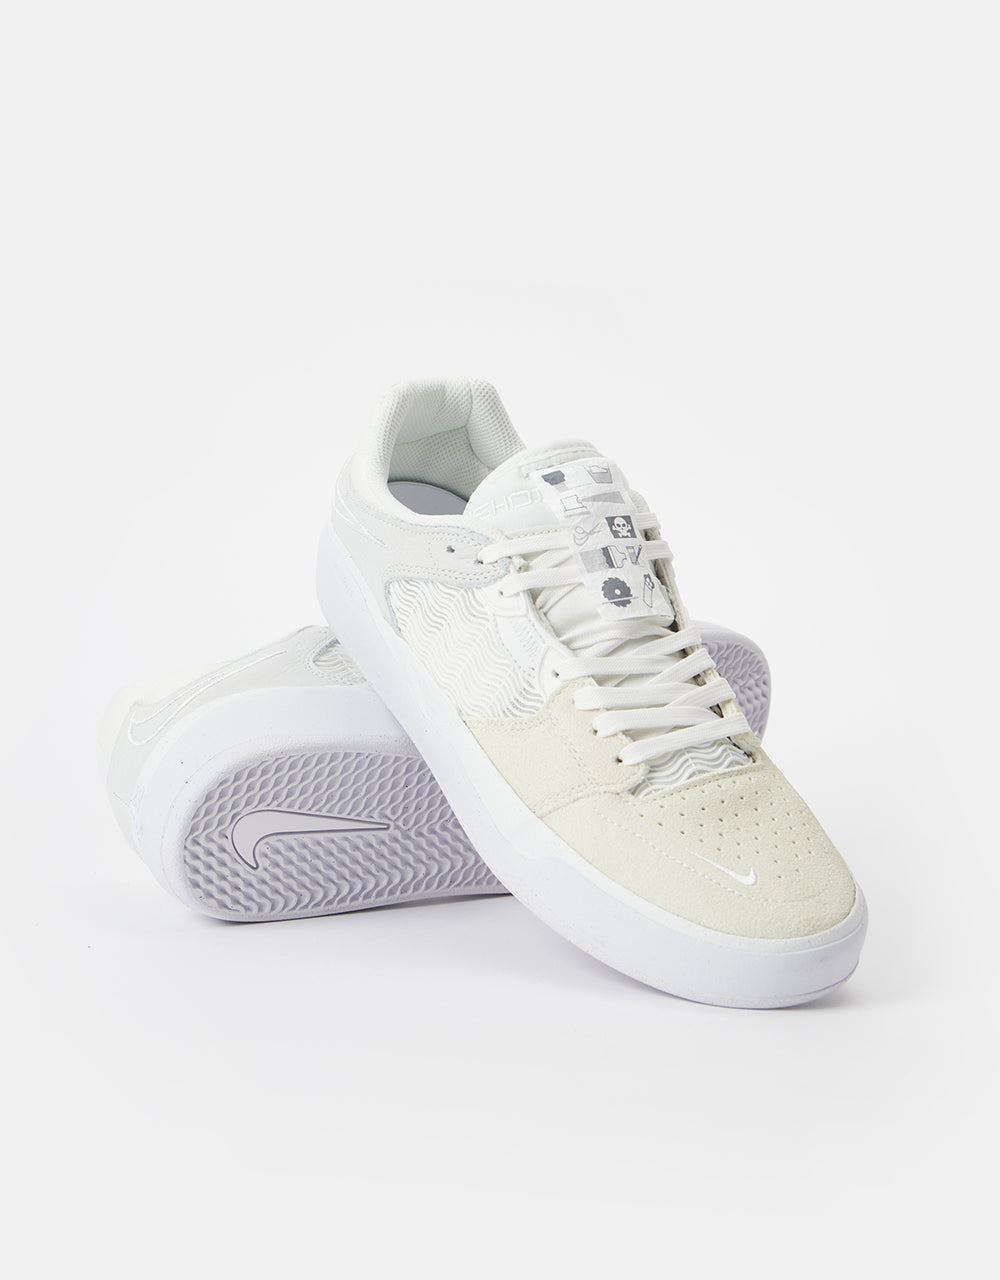 Nike SB Ishod Premium Skate Shoes - Summit White/Summit White-Summit White